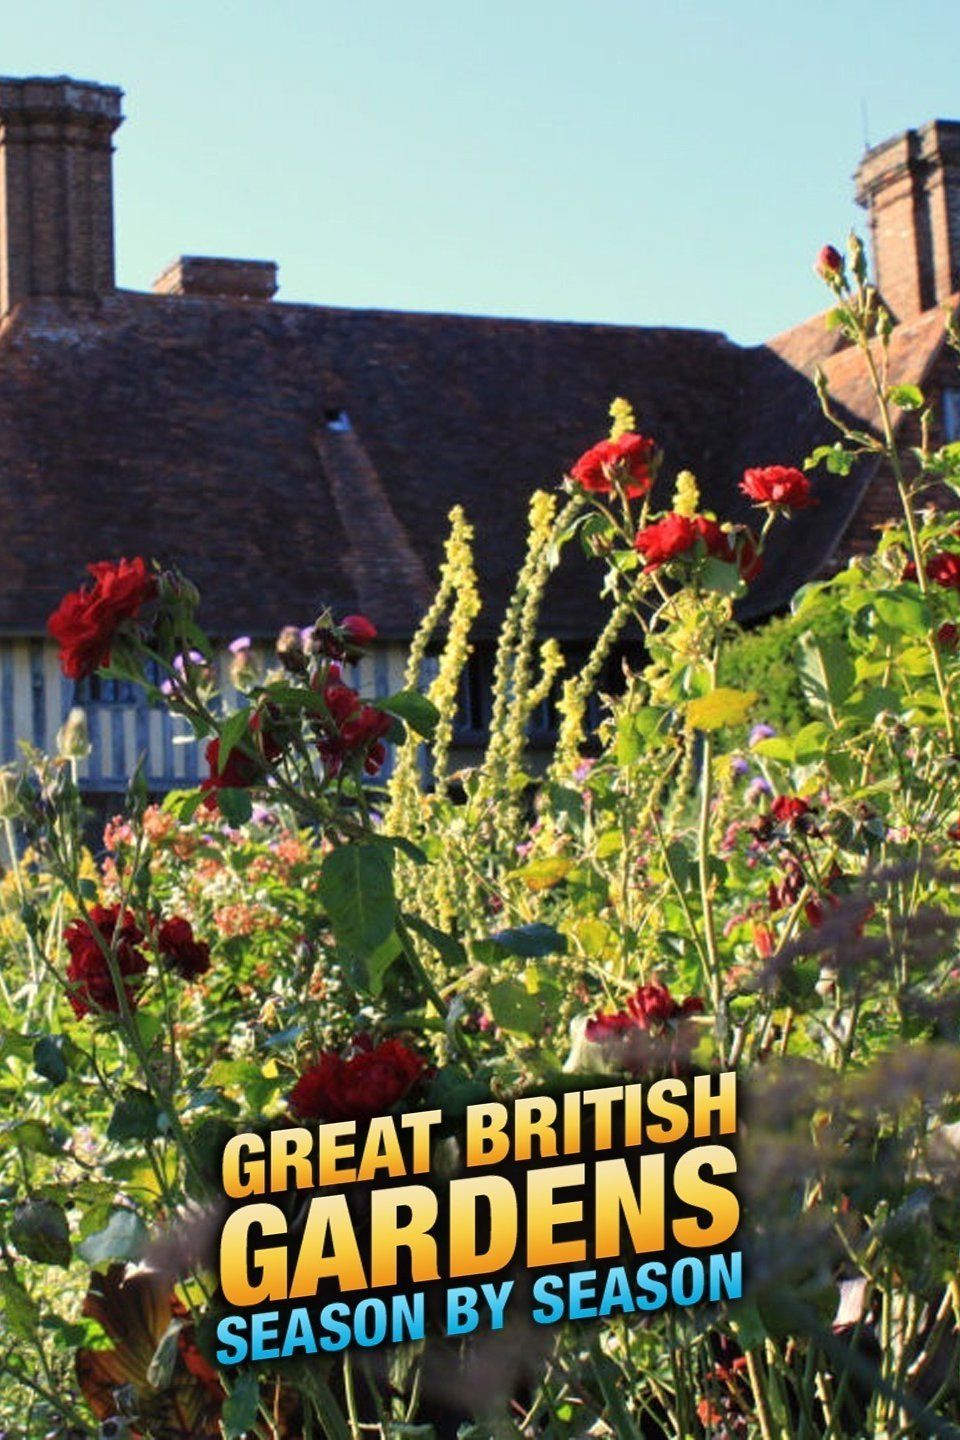 Great British Gardens: Season by Season with Carol Klein ne zaman